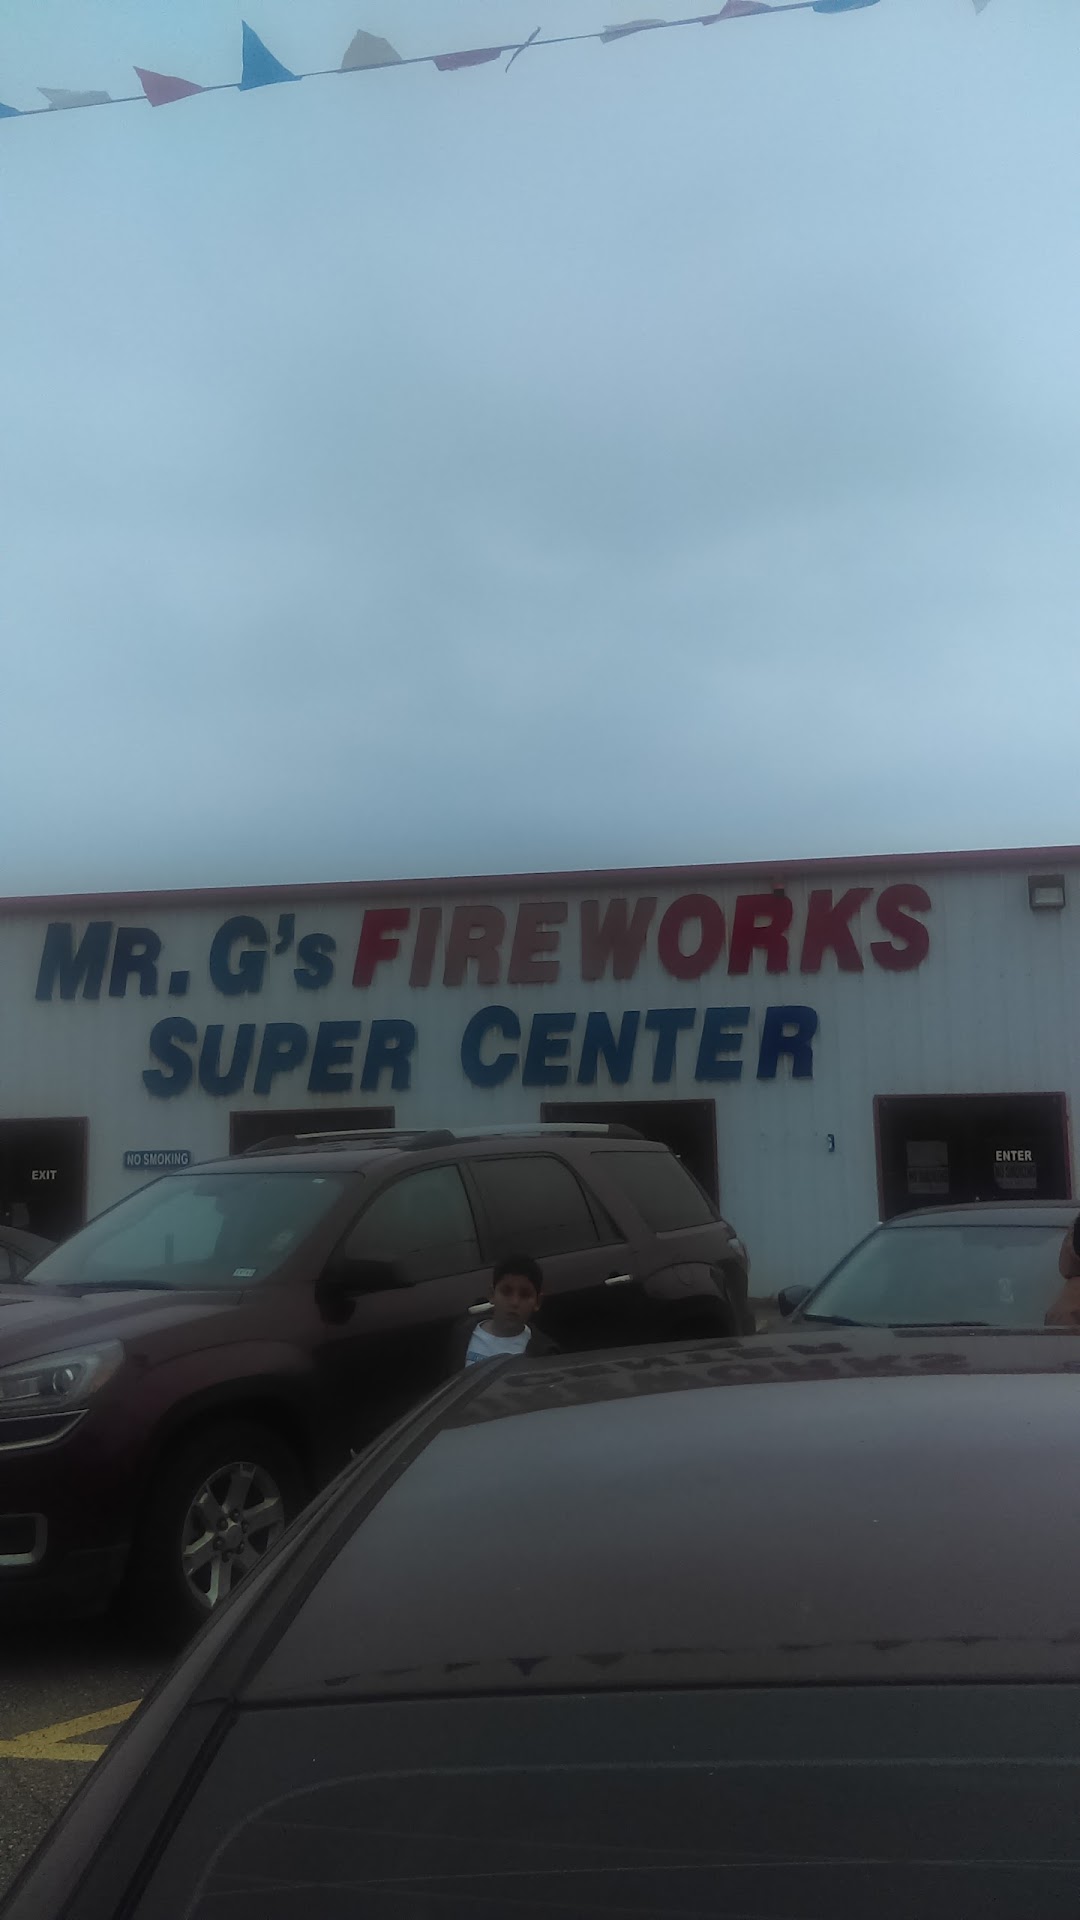 Mr Gs Fireworks